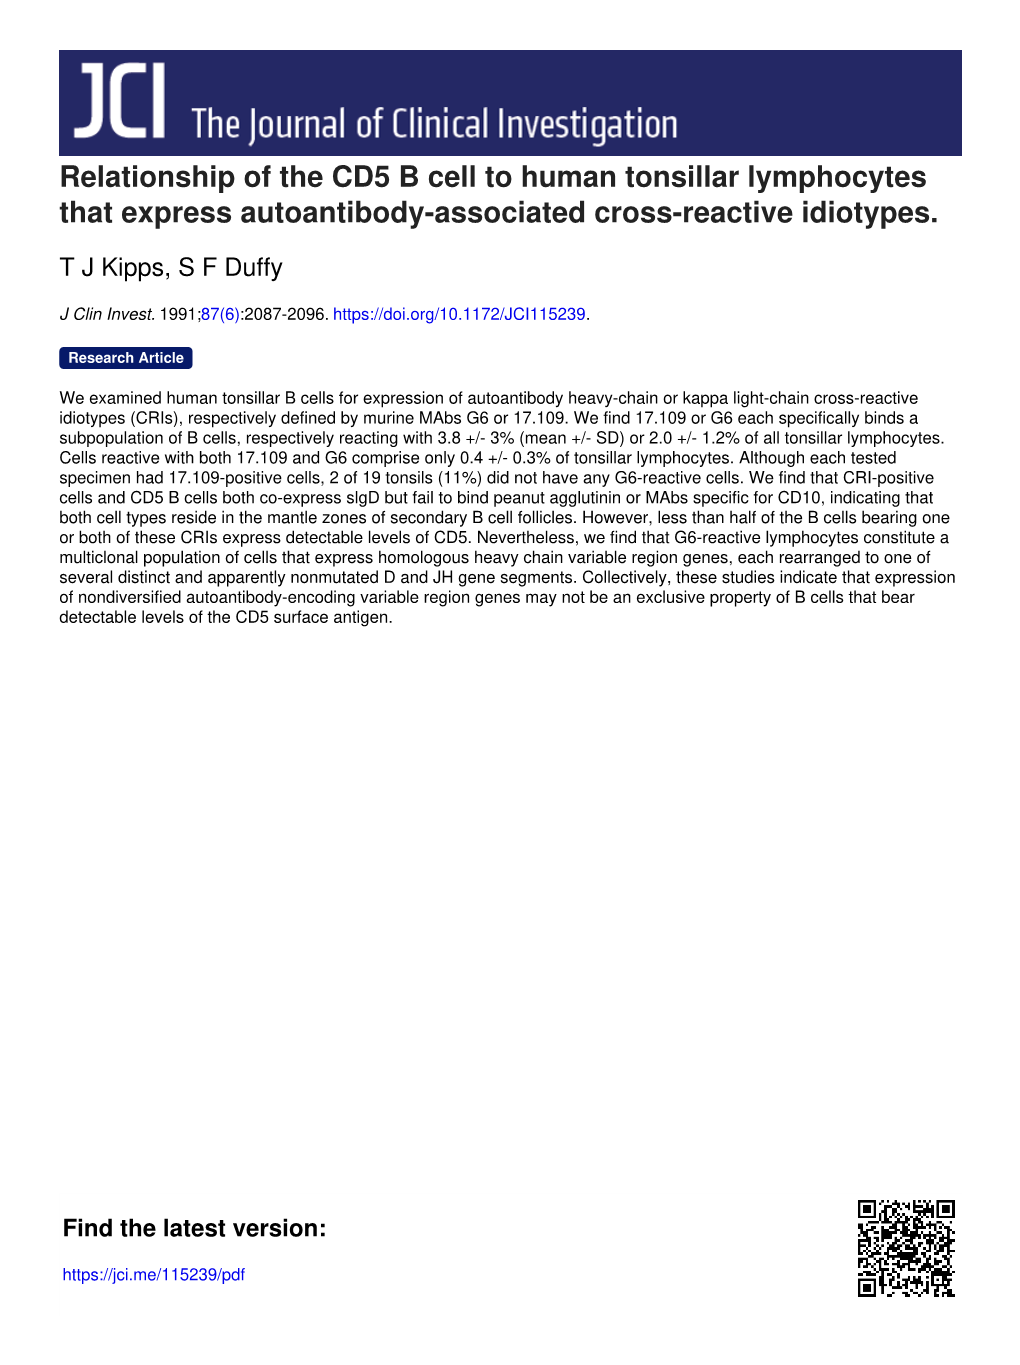 Relationship of the CD5 B Cell to Human Tonsillar Lymphocytes That Express Autoantibody-Associated Cross-Reactive Idiotypes